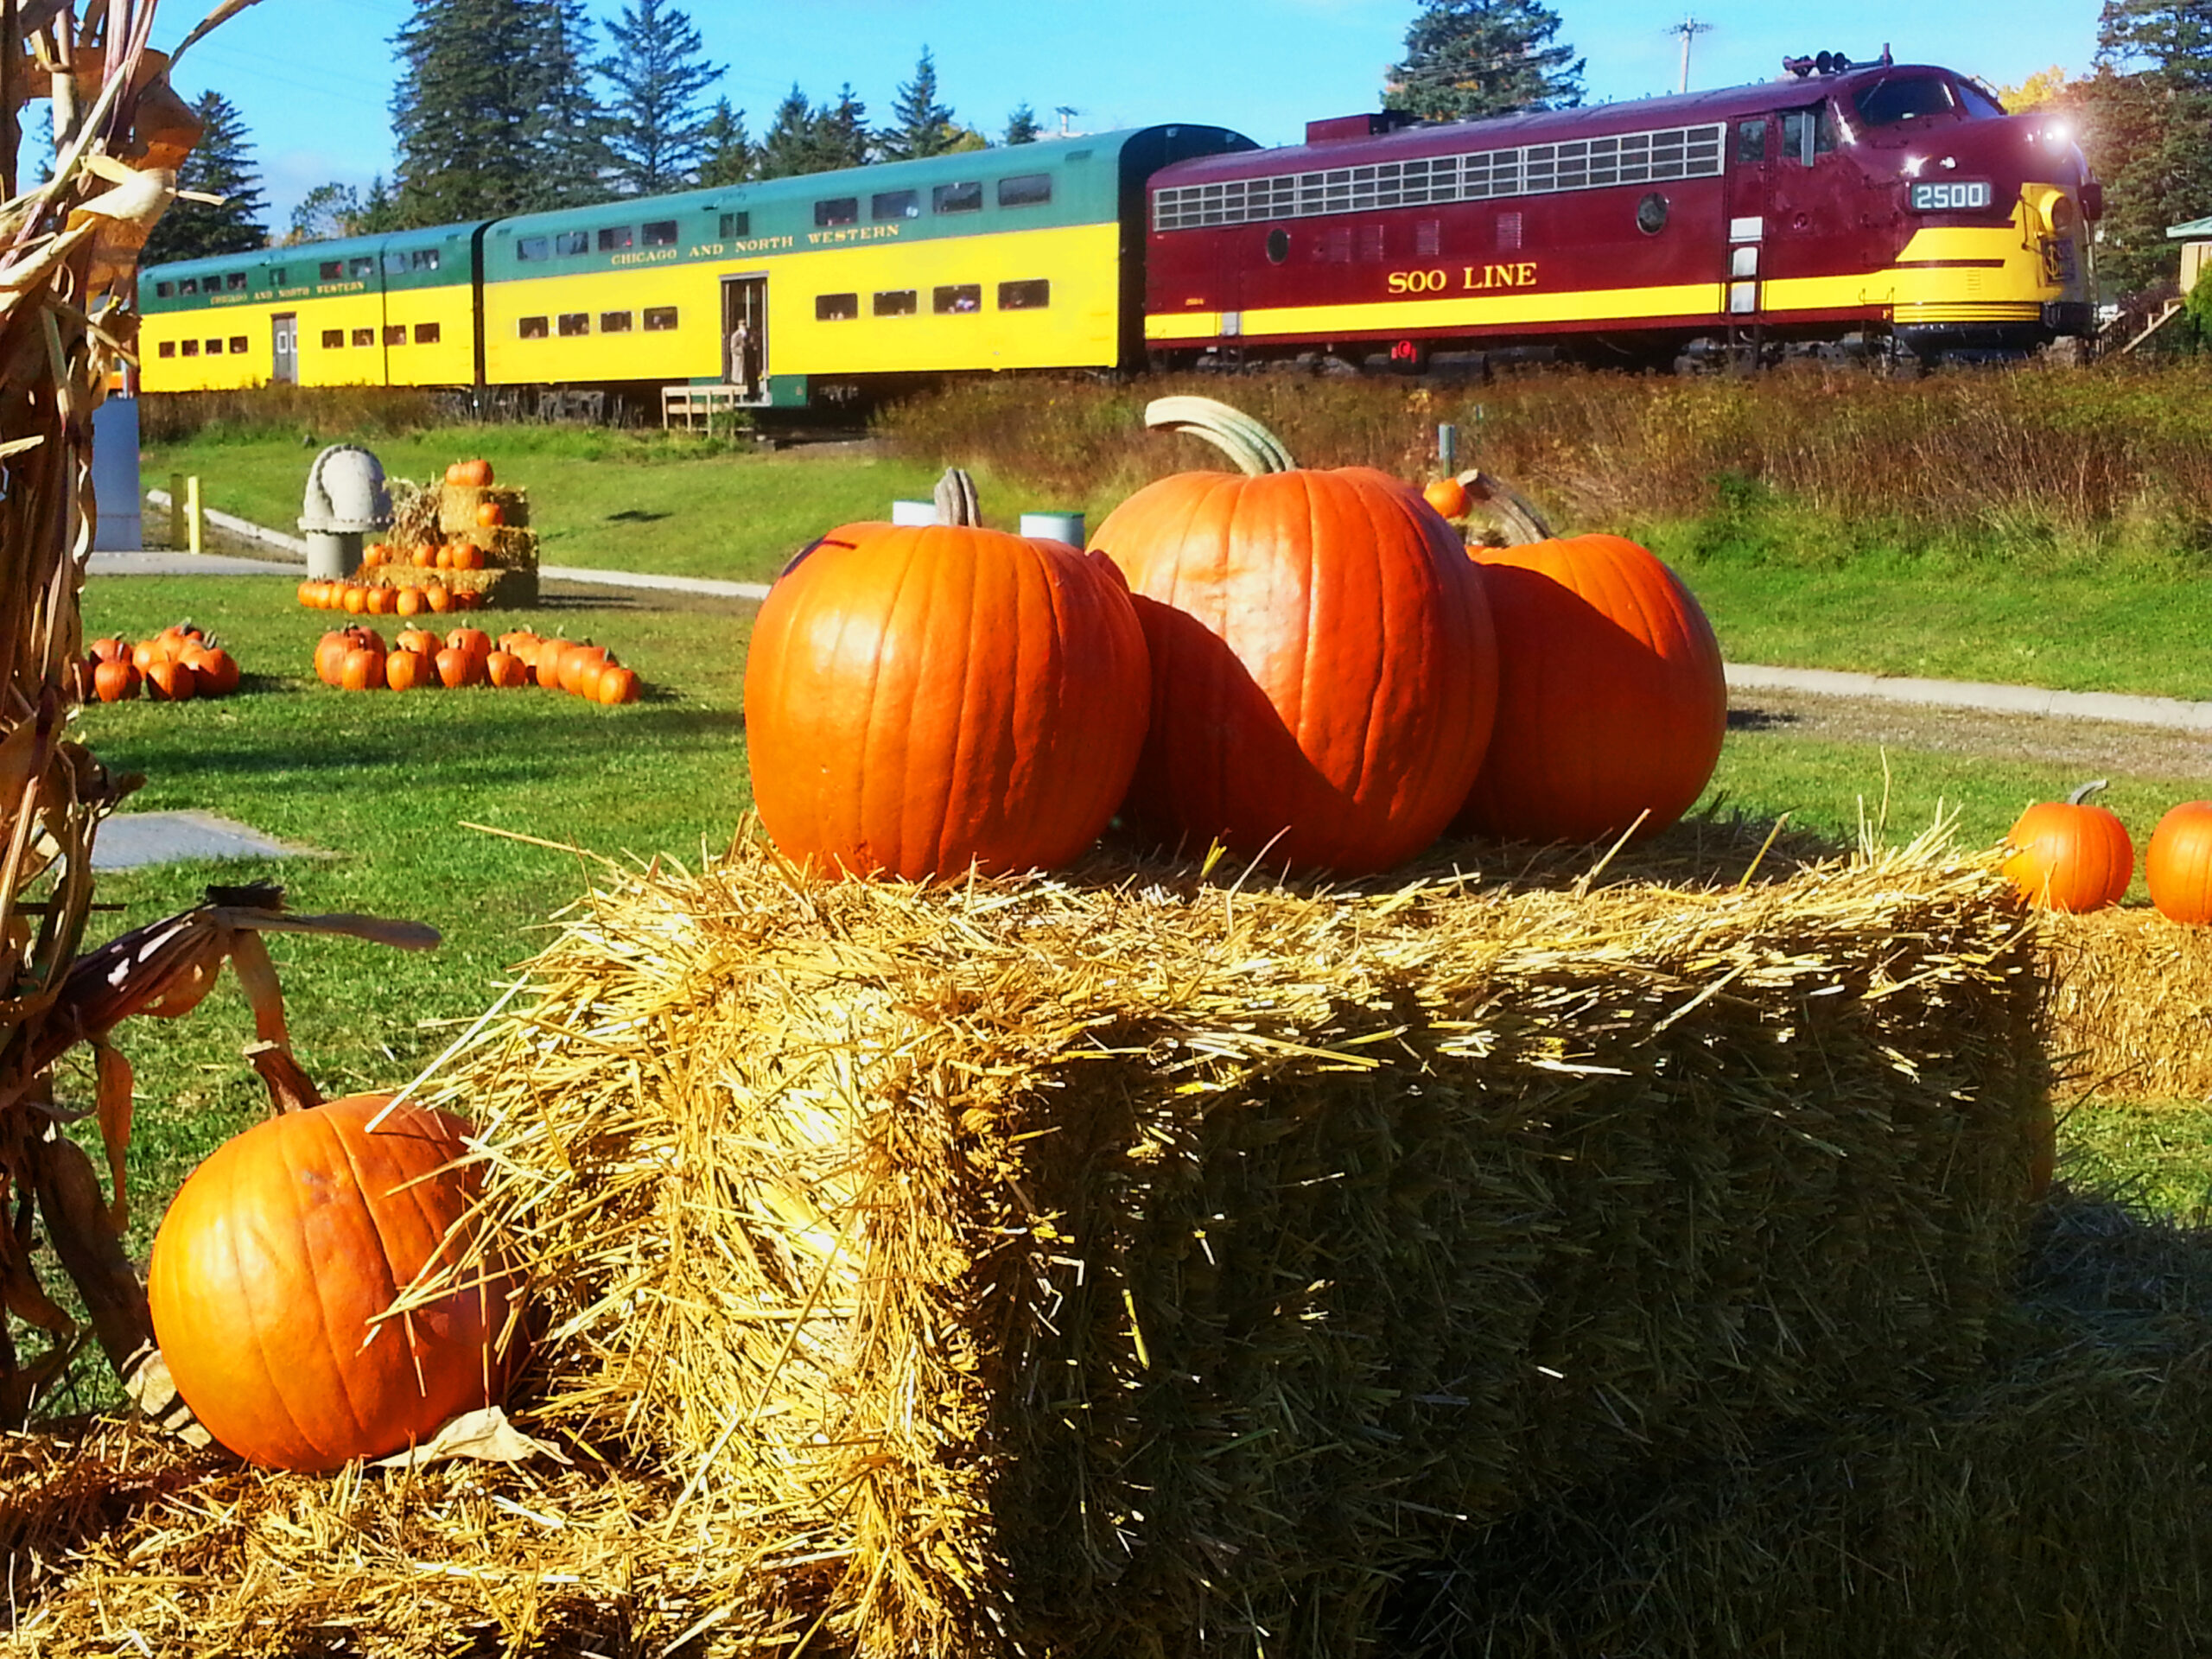 The Great Pumpkin Train